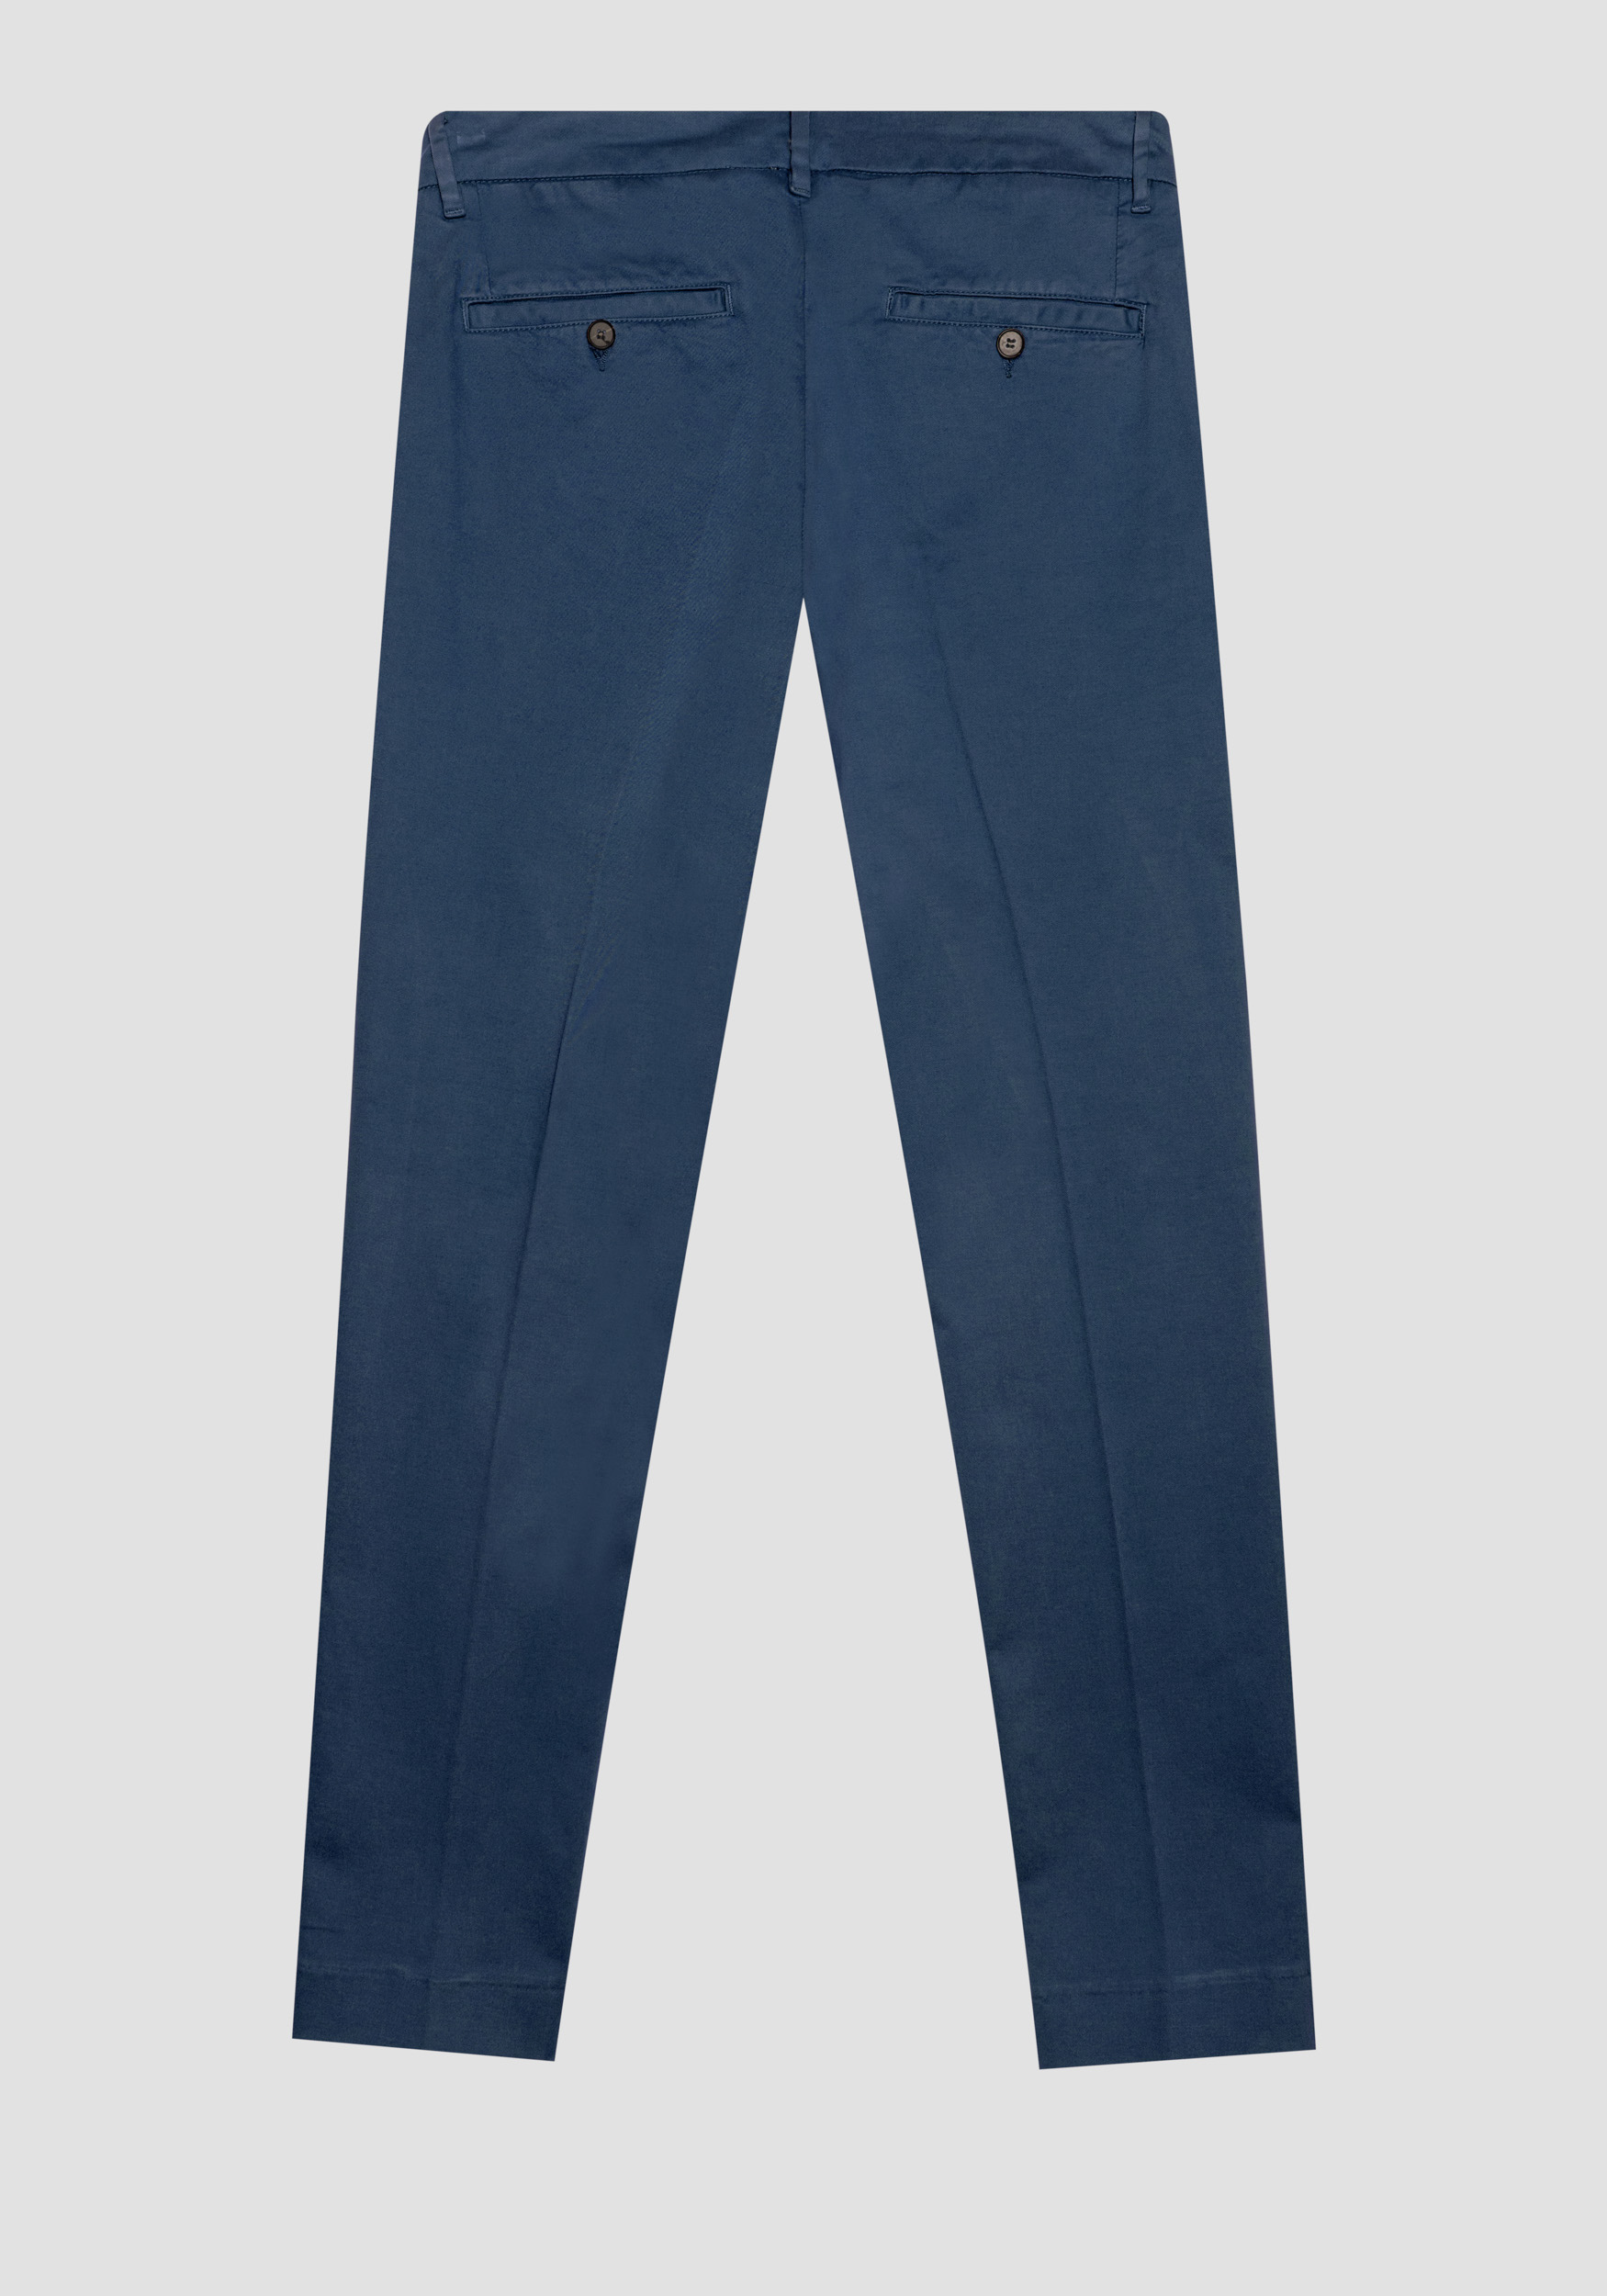 Antony Morato Pantalon Skinny Fit Bryan En Coton Doux Elastique Micro-Armure Avio | Homme Pantalons